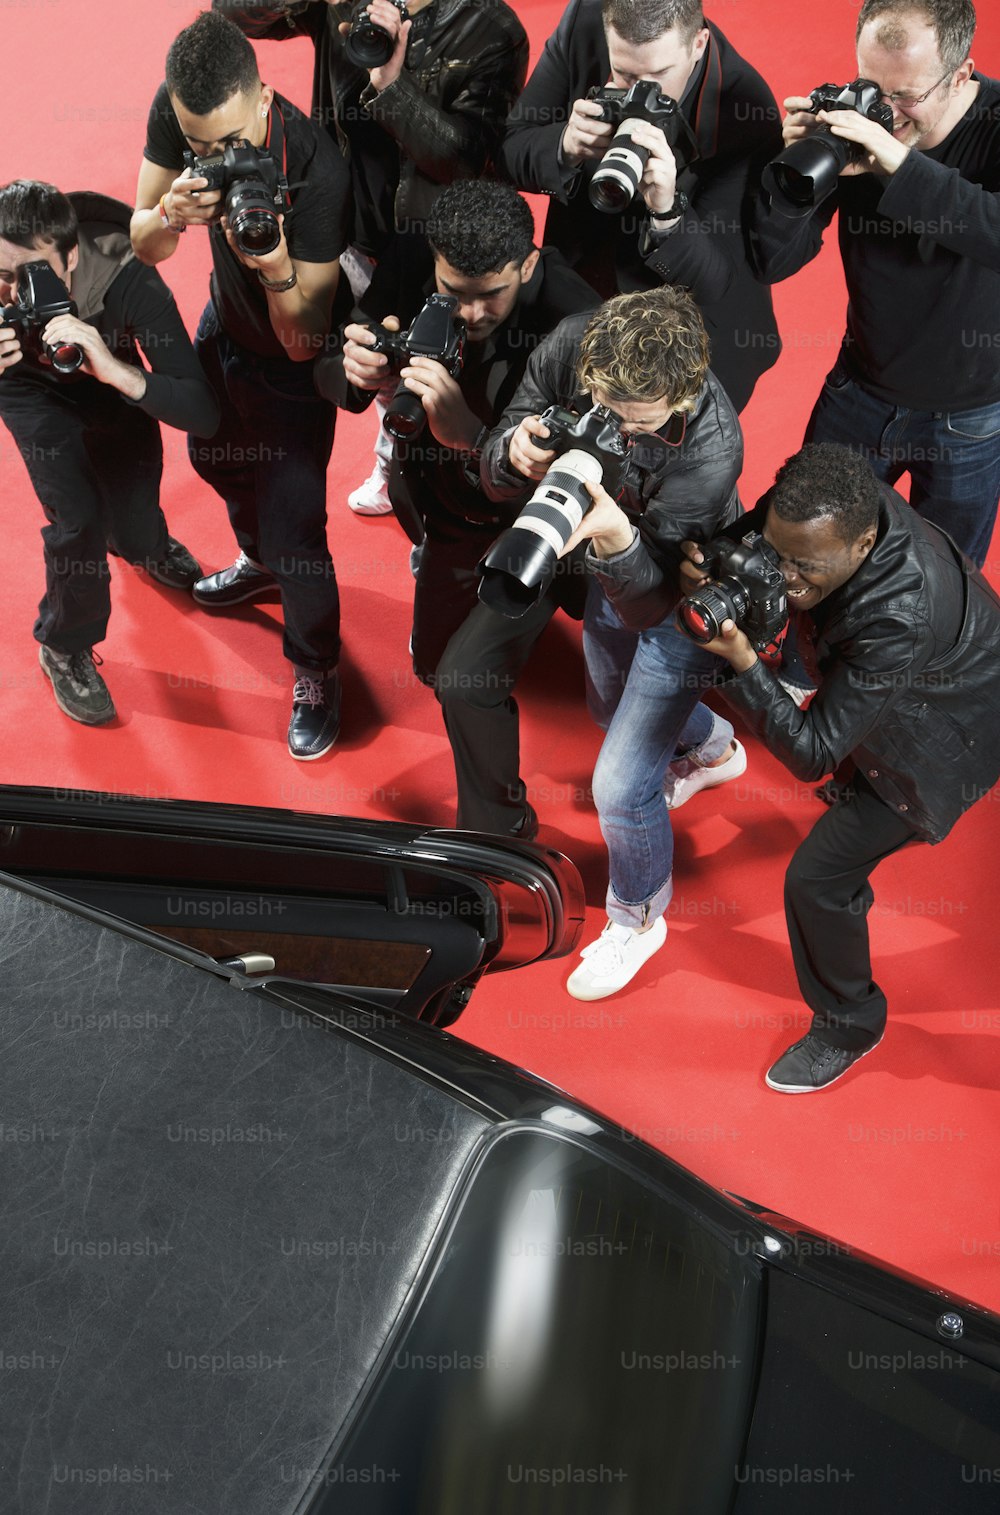 Un grupo de fotógrafos tomando fotos de un hombre en una alfombra roja